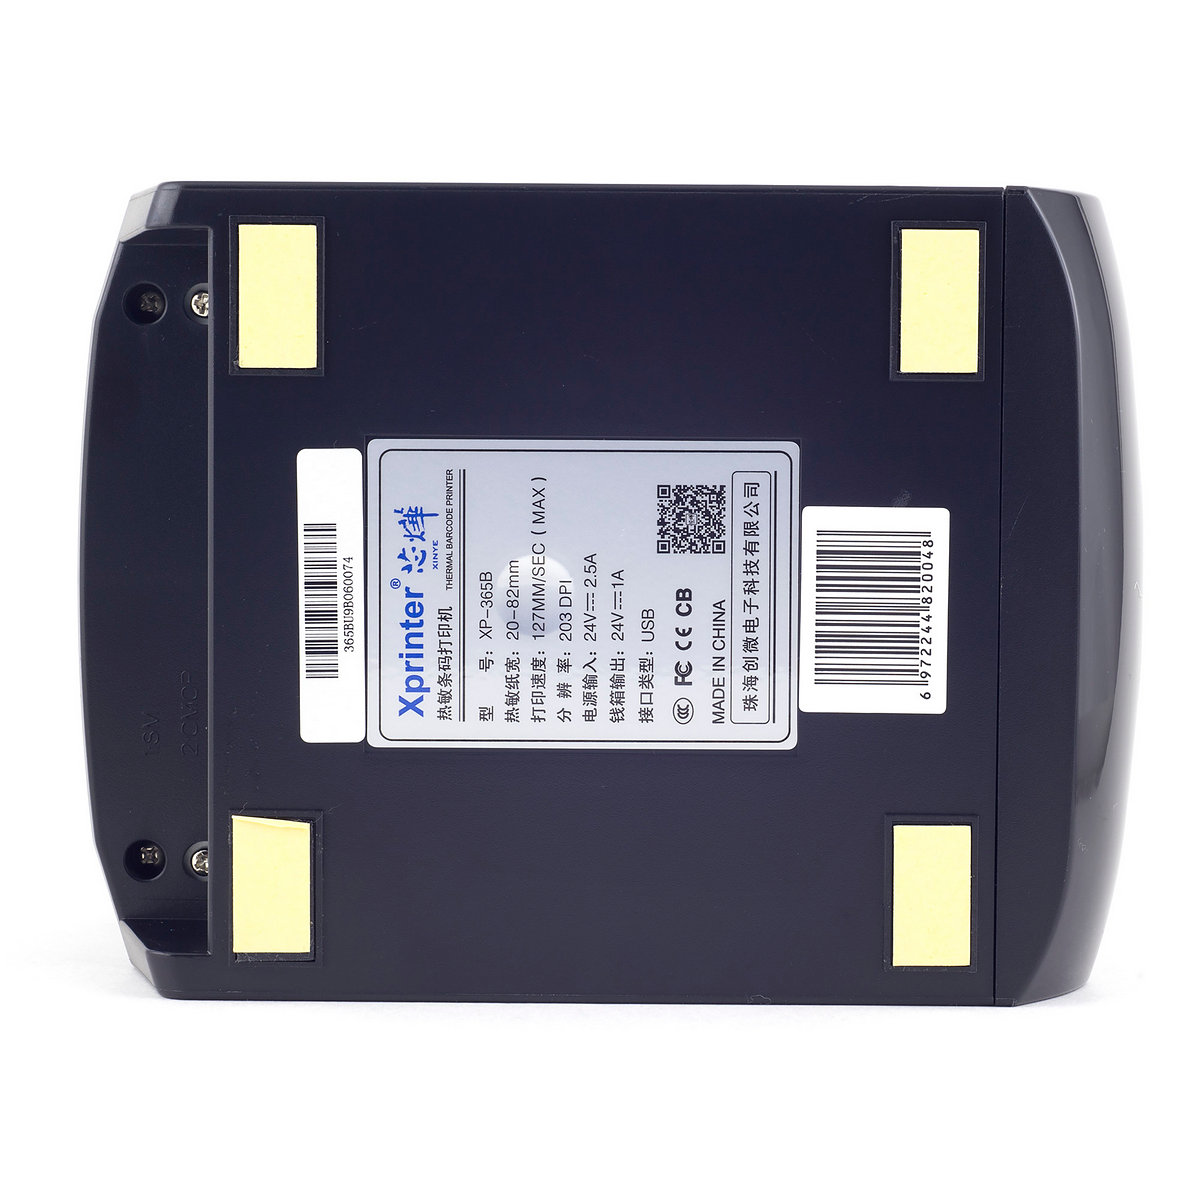 Принтер этикеток Xprinter XP-365B, 203 dpi, USB INOZ365B (для маркировки Озон)